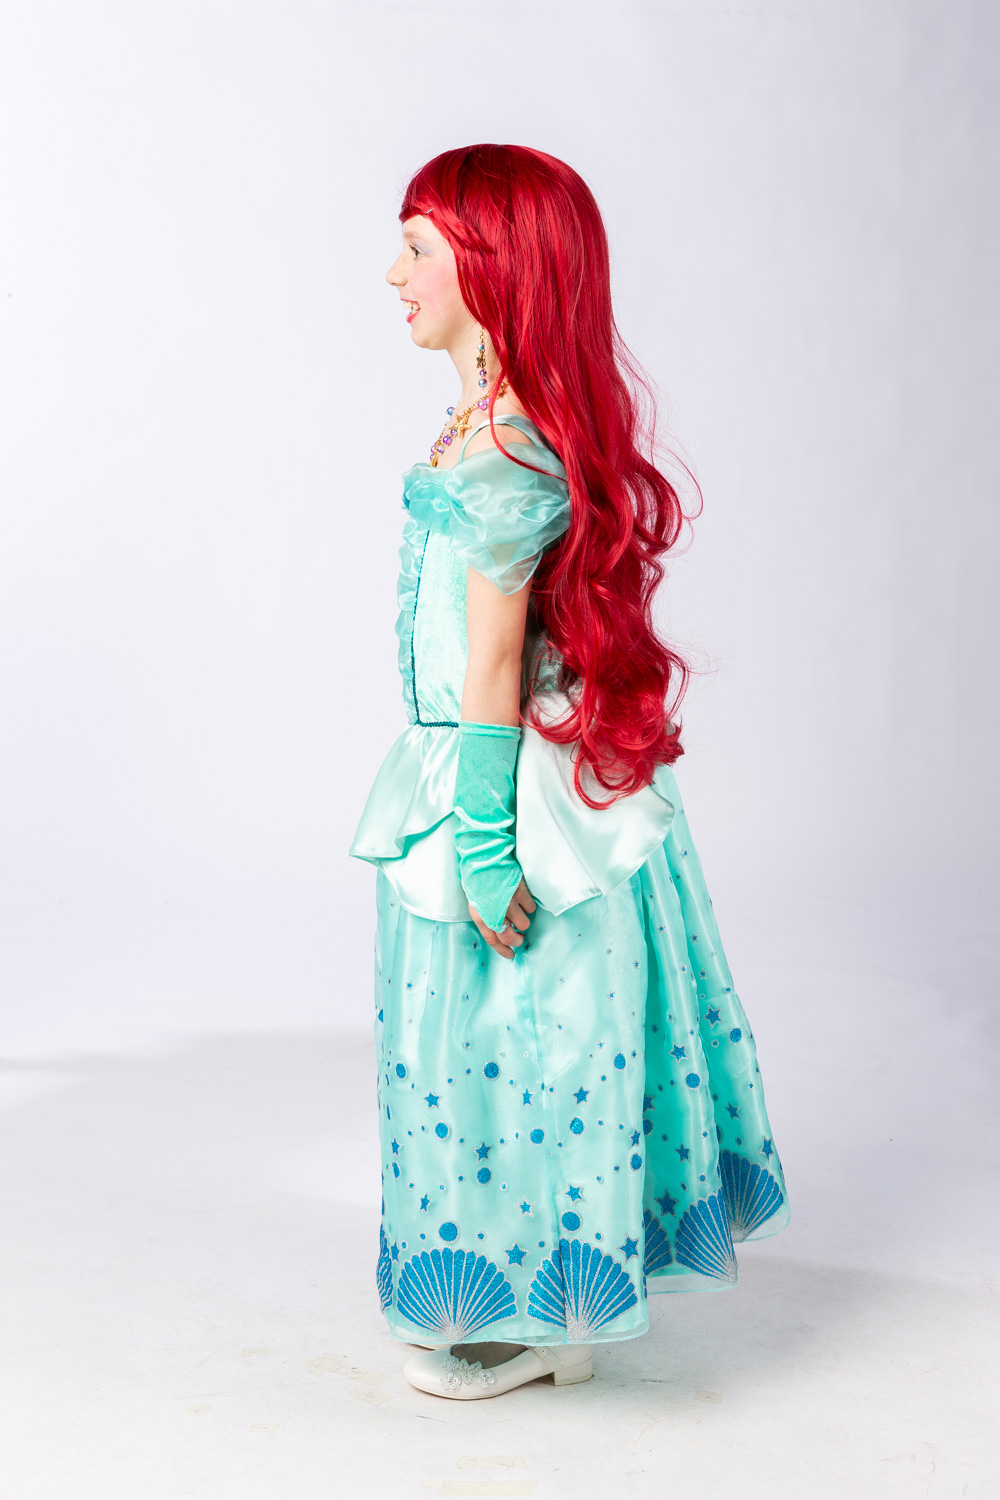 Costume de princesse sirène